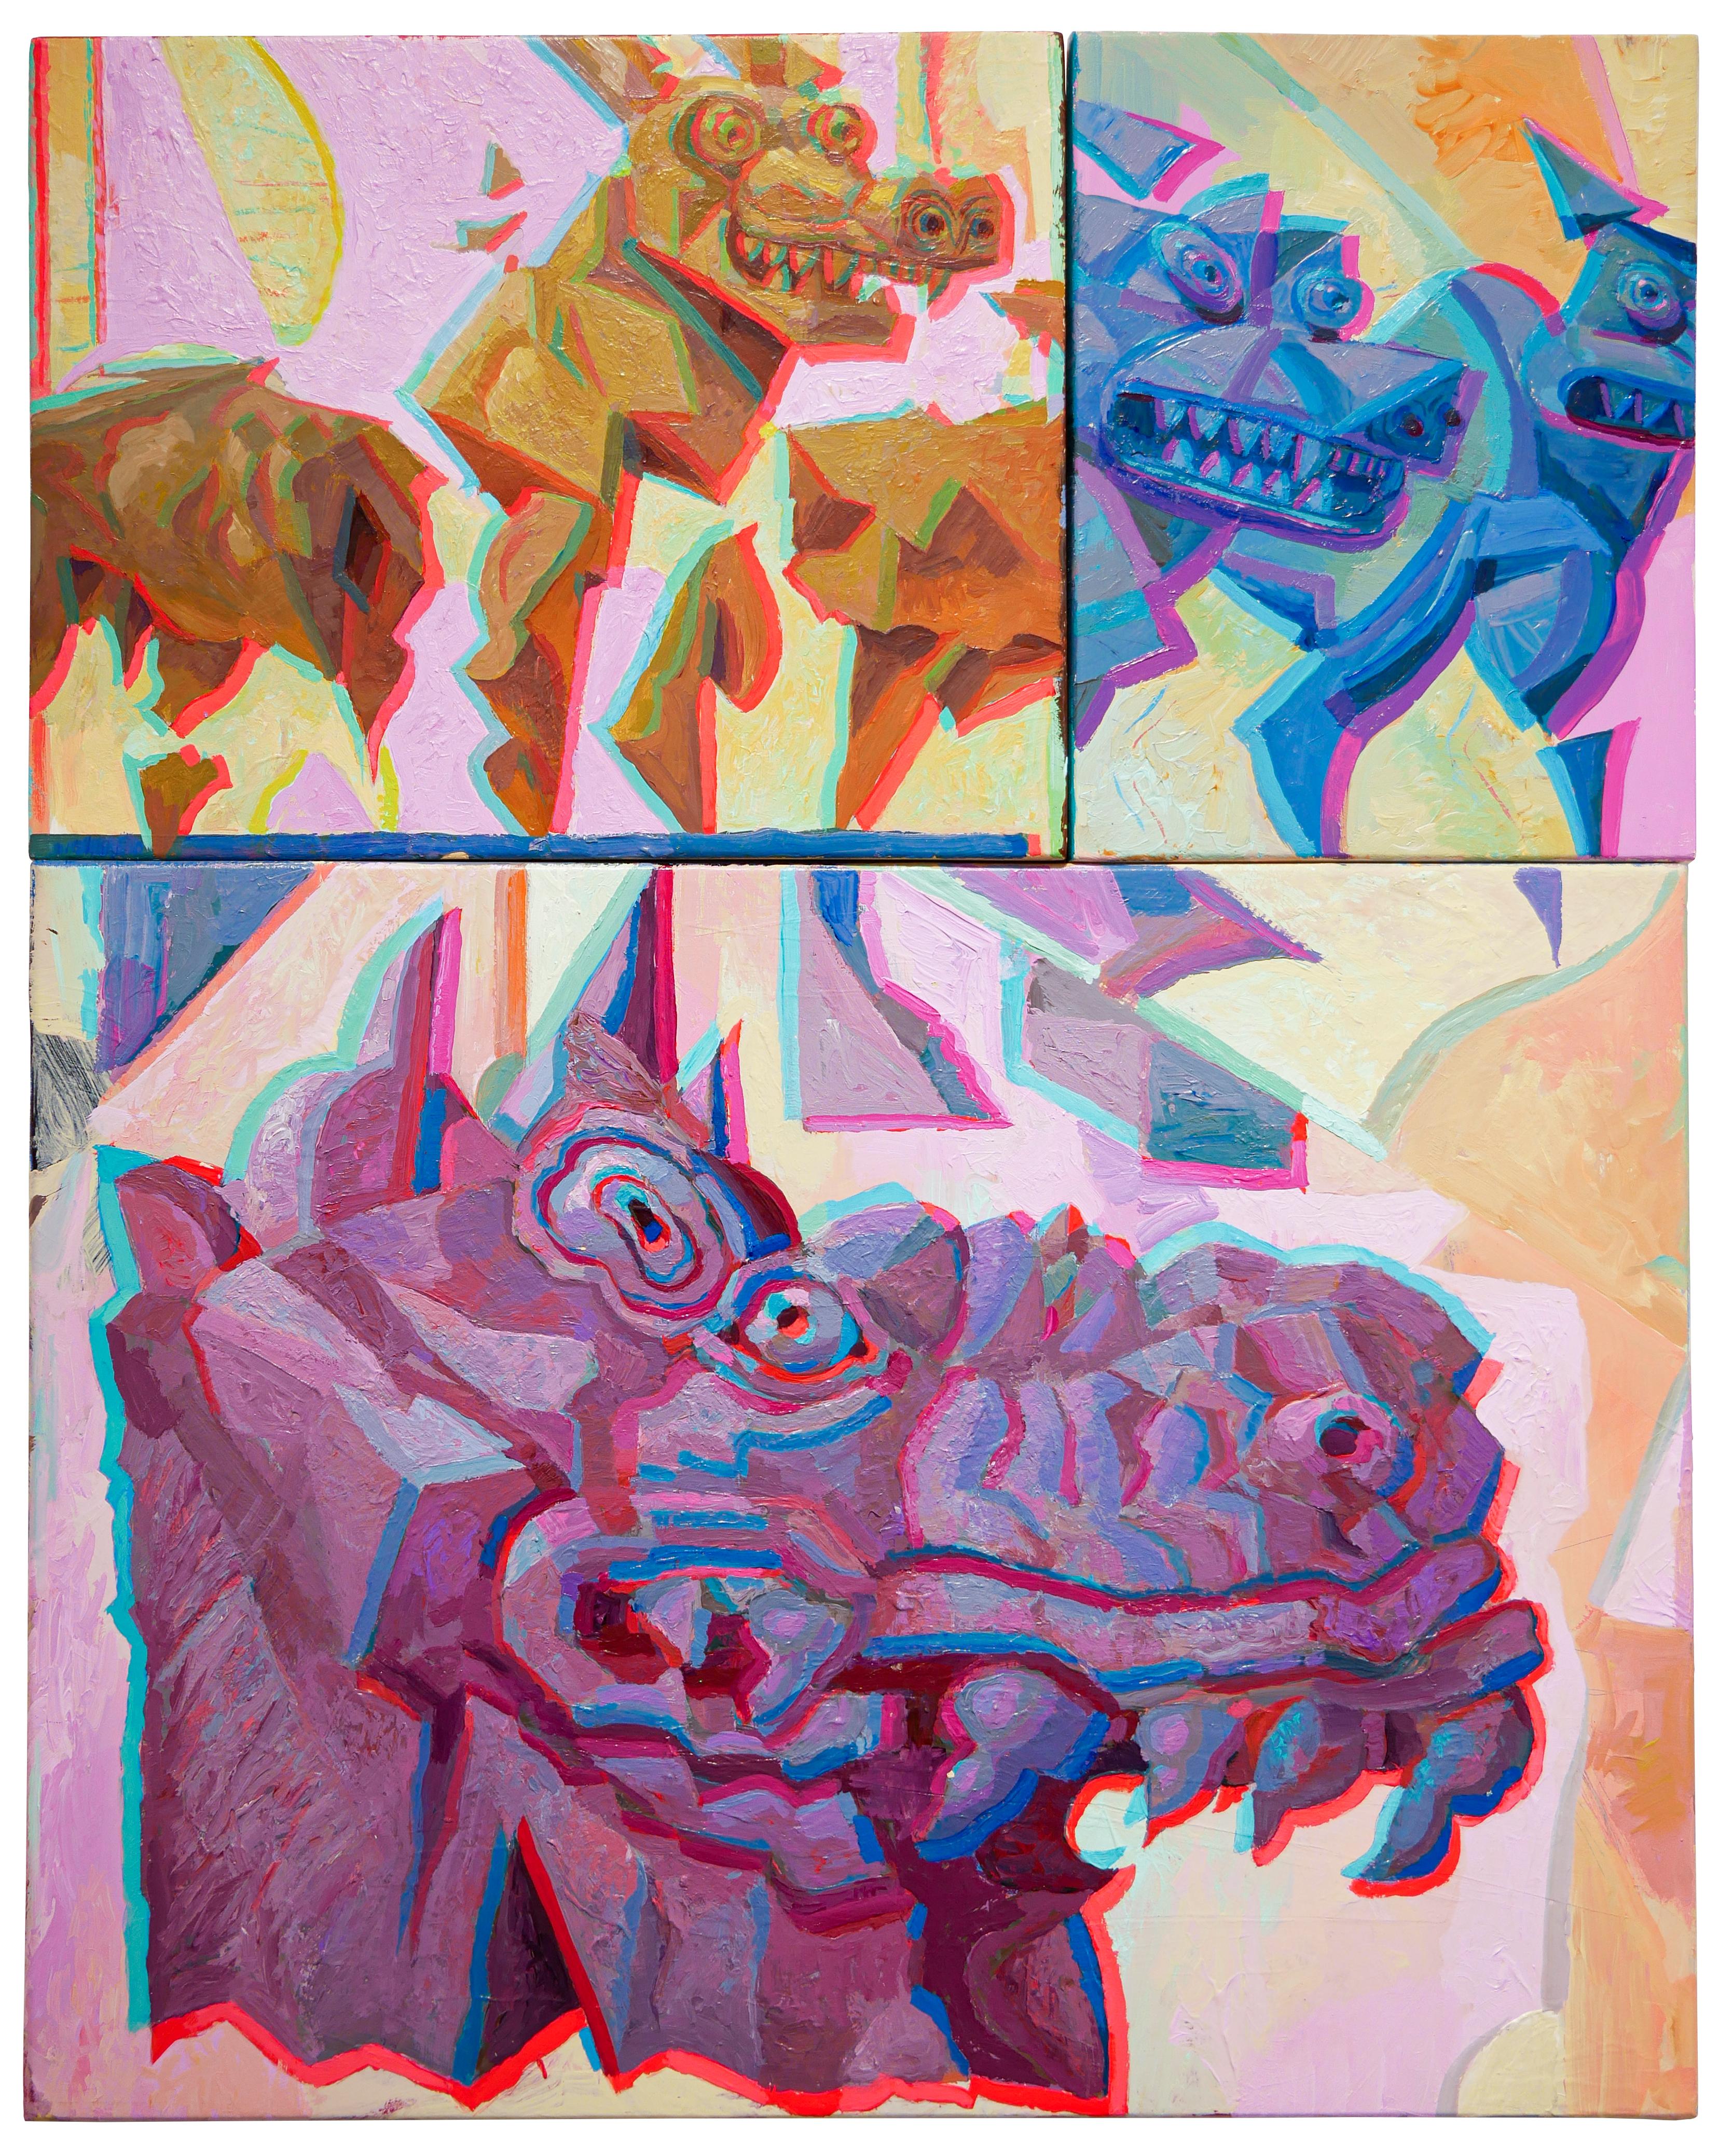 Figurative Painting Robert MacKenzie - "Copy of a Fake" - Peinture d'anaglyphe violette, rose fluo et blanche